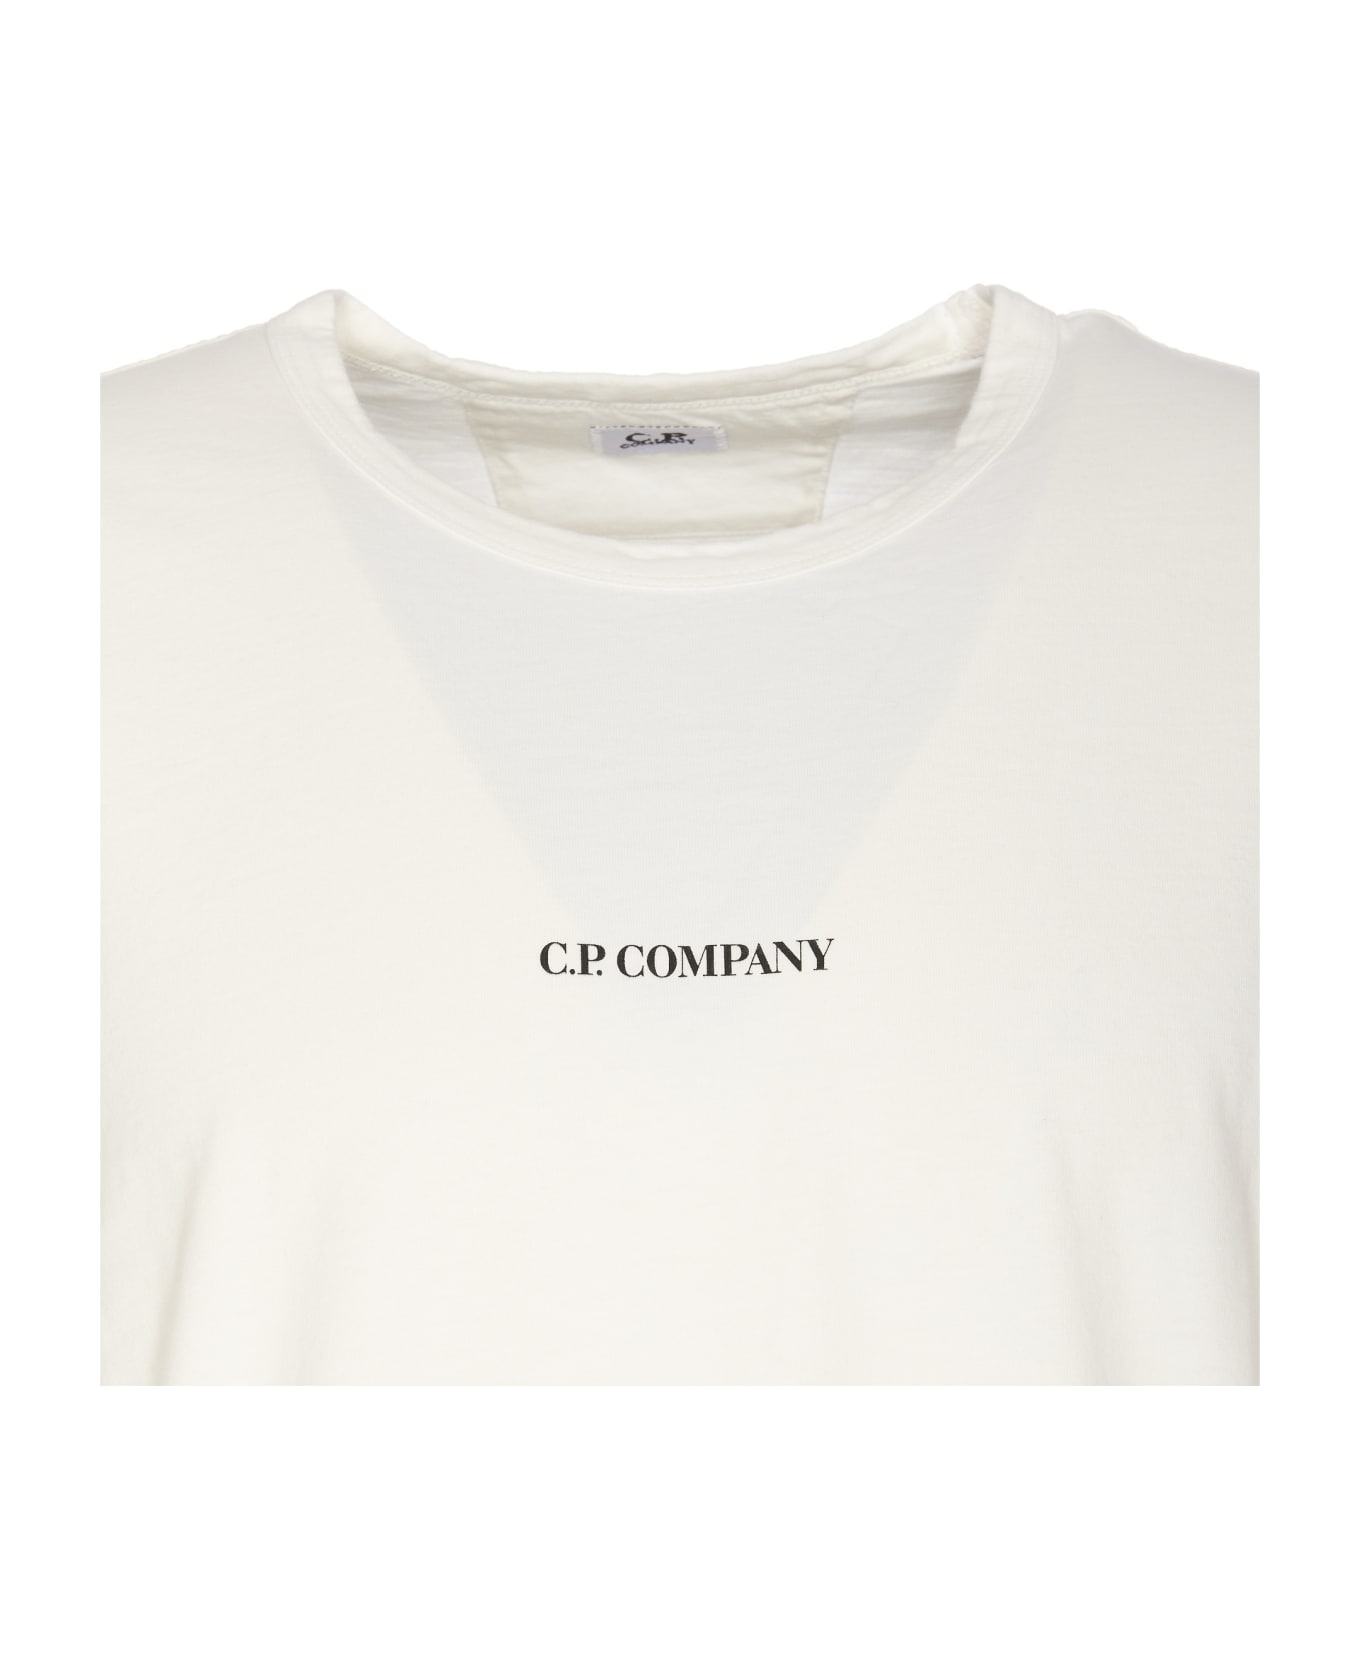 C.P. Company Logo T-shirt - White